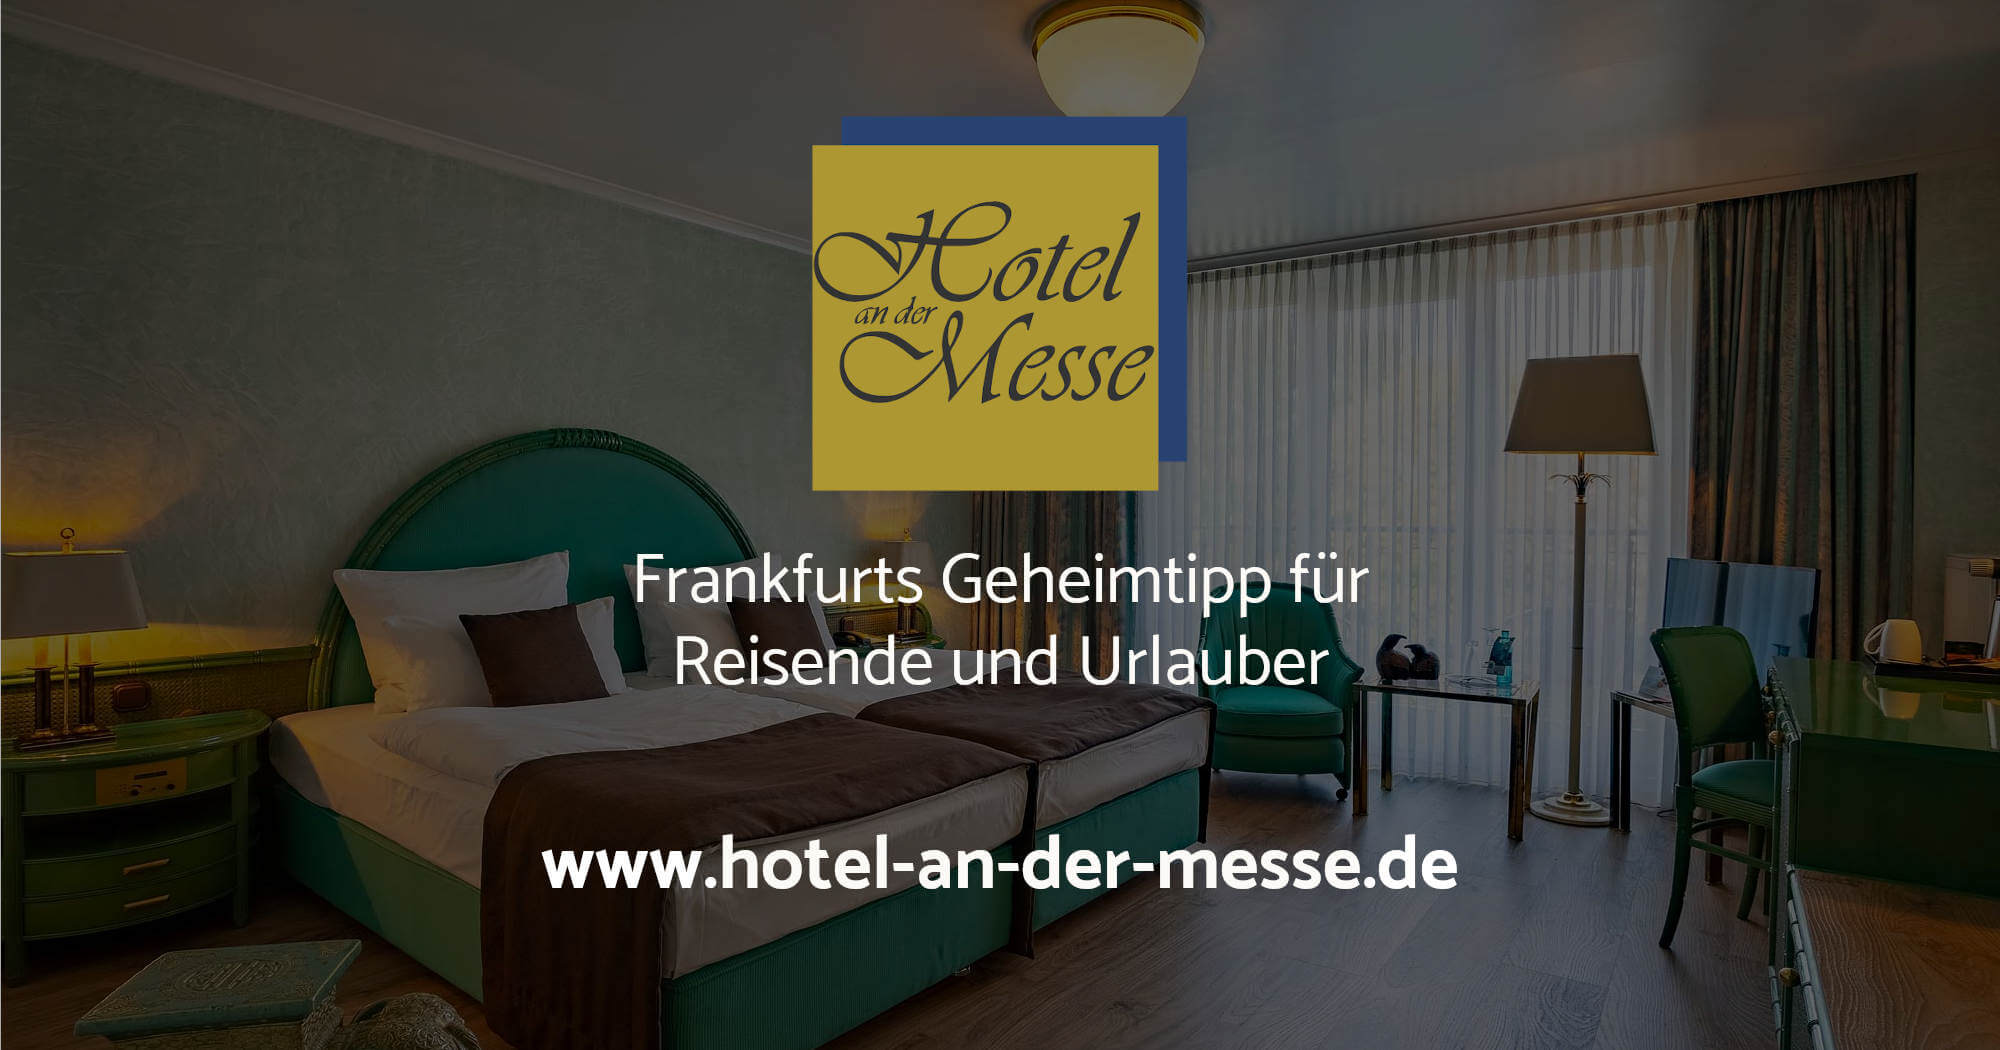 OpenGraph: Facebook | Villa Westend Hotel an der Messe | Frankfurt's insider tip · Business · Leisure